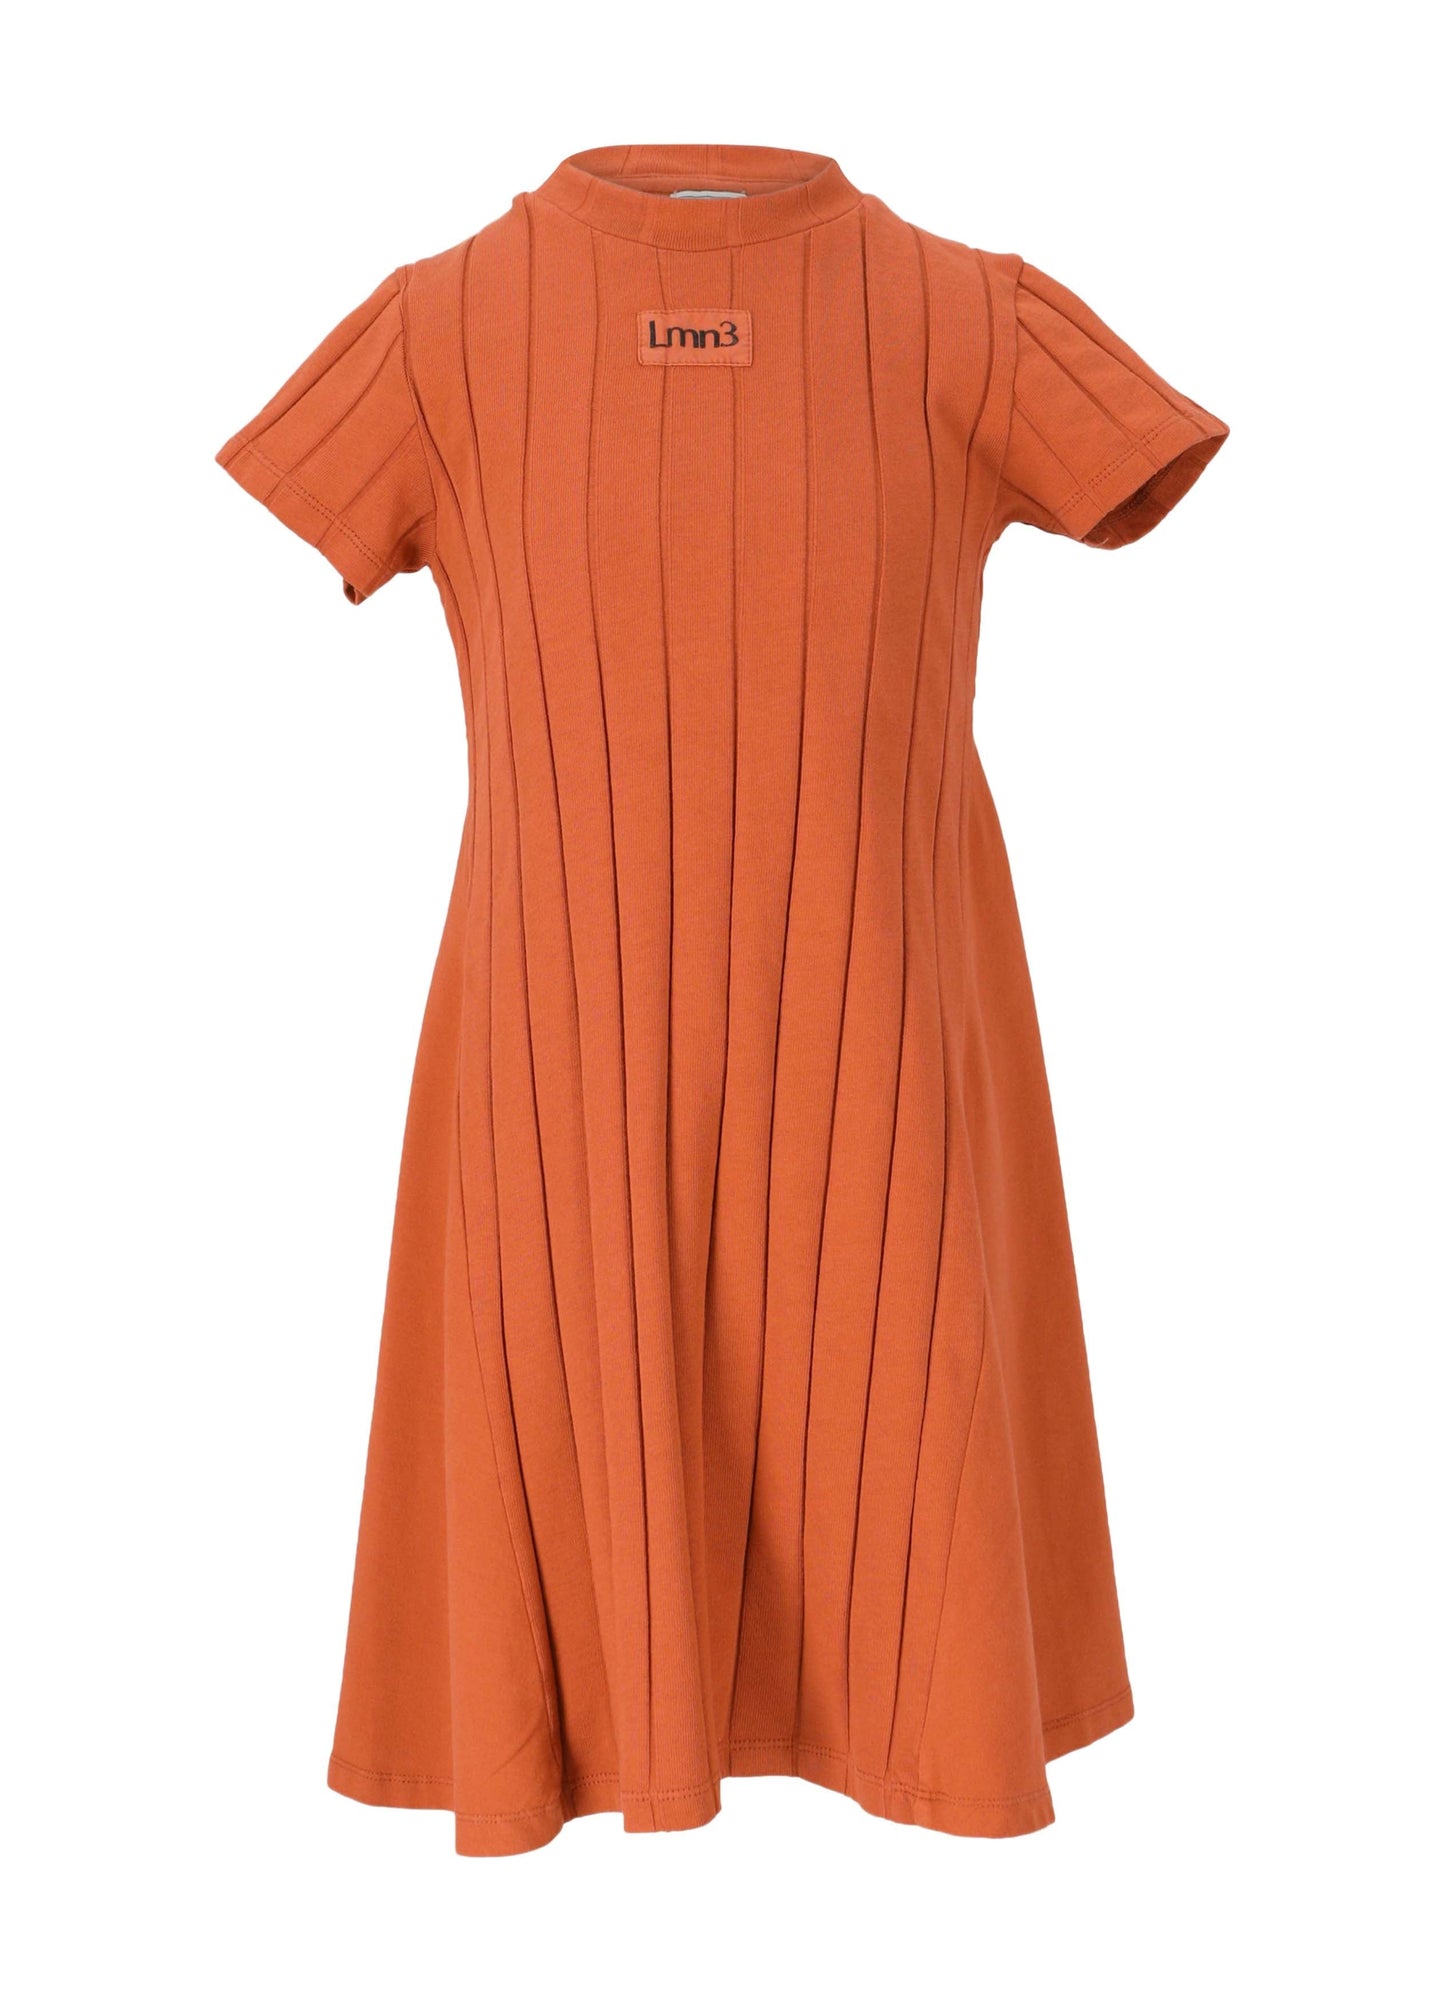 Dress No. 20 - Caramel Dresses LMN3 